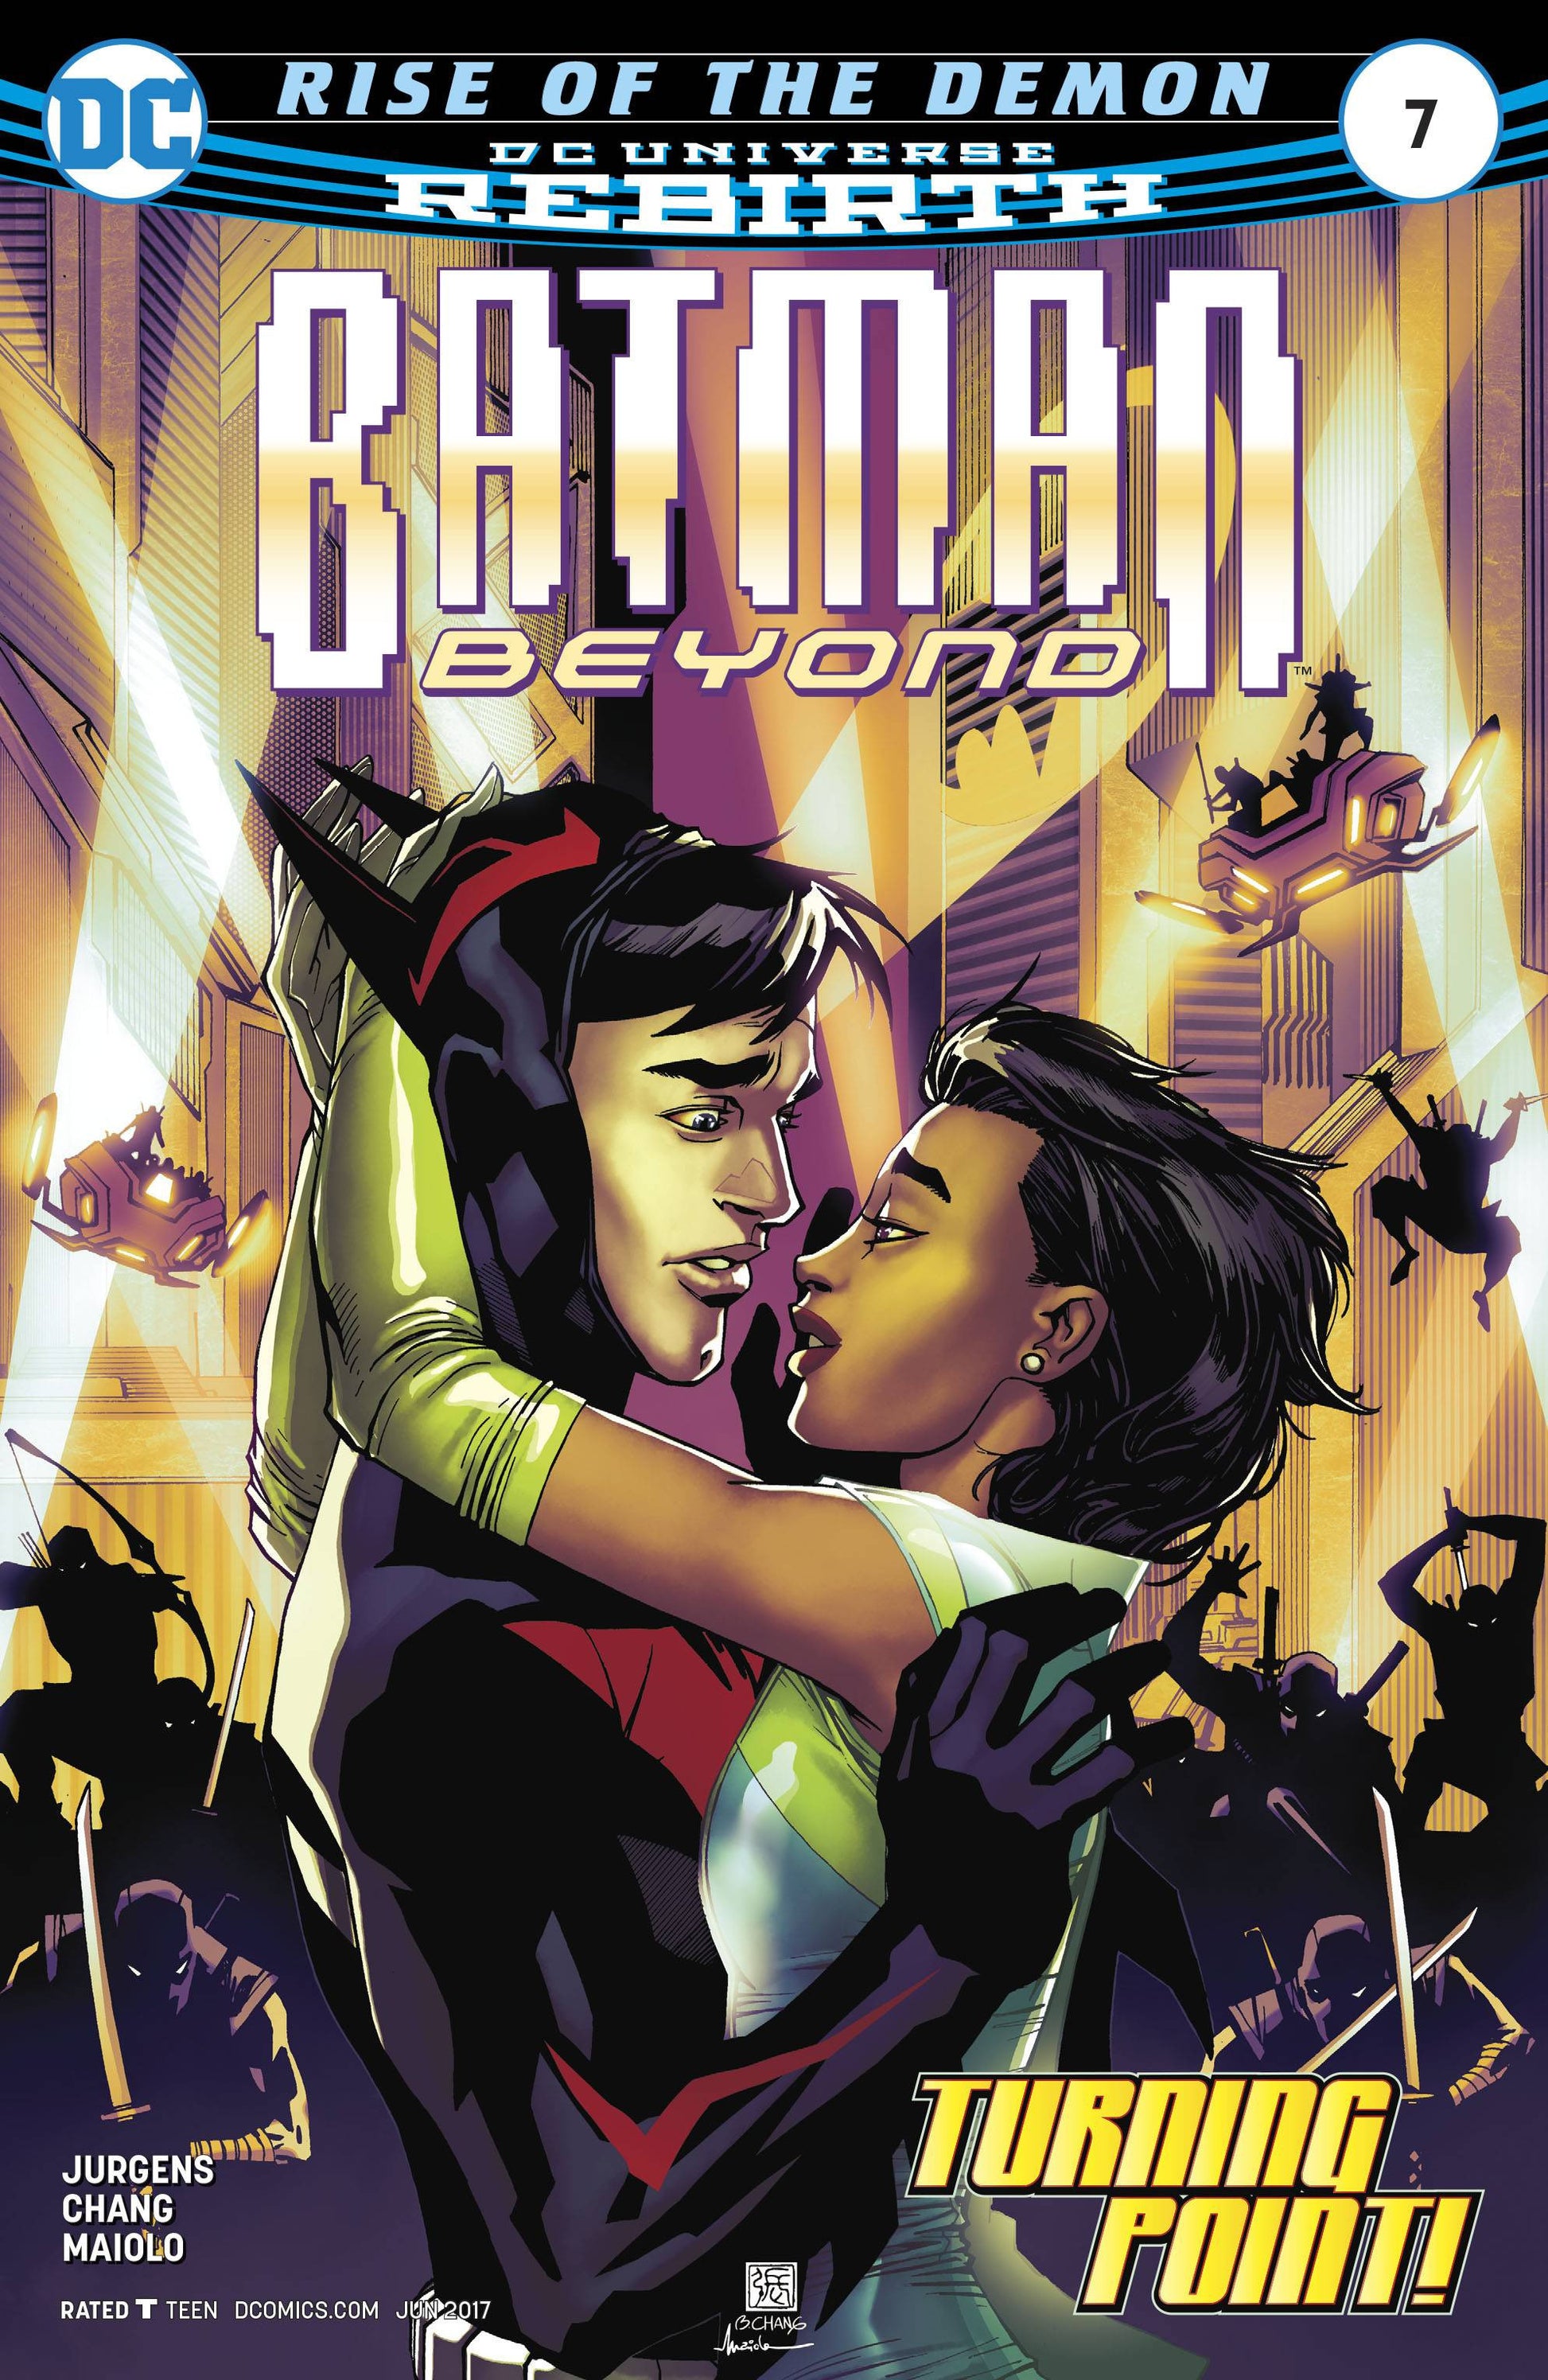 BATMAN BEYOND #7 COVER